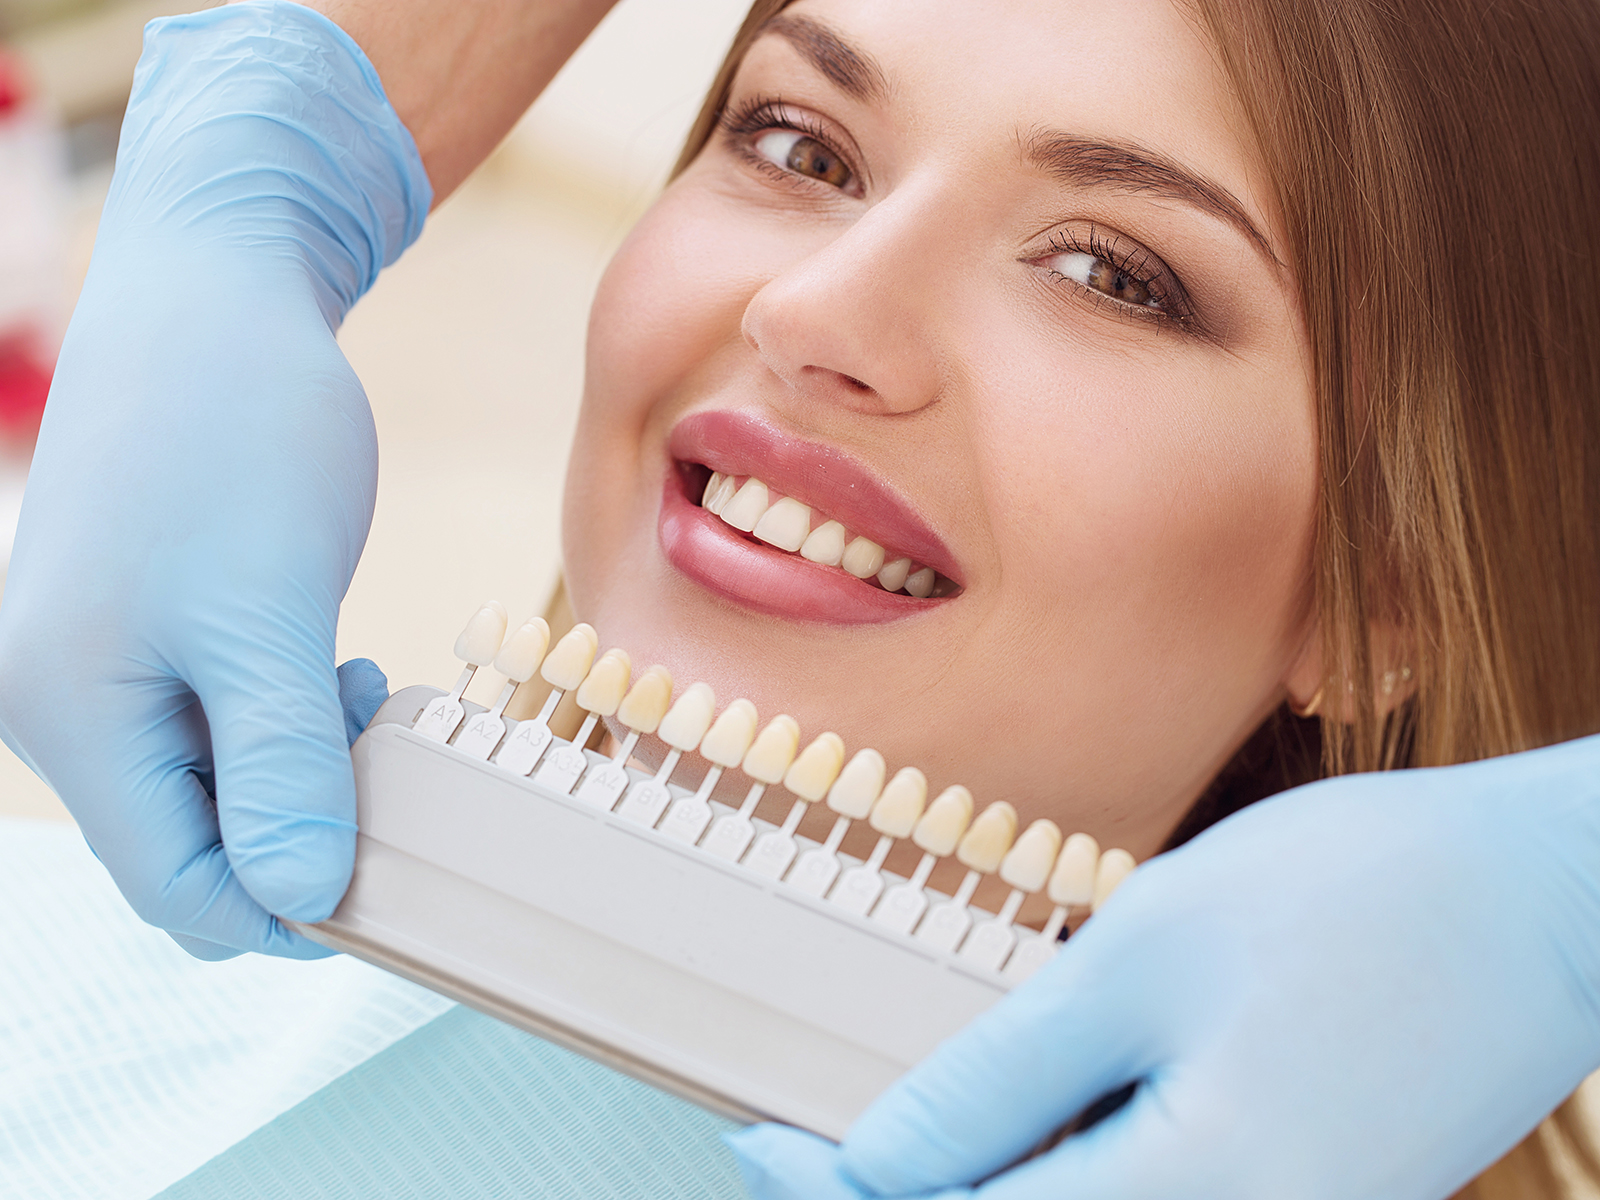 What are restorative dental procedures?